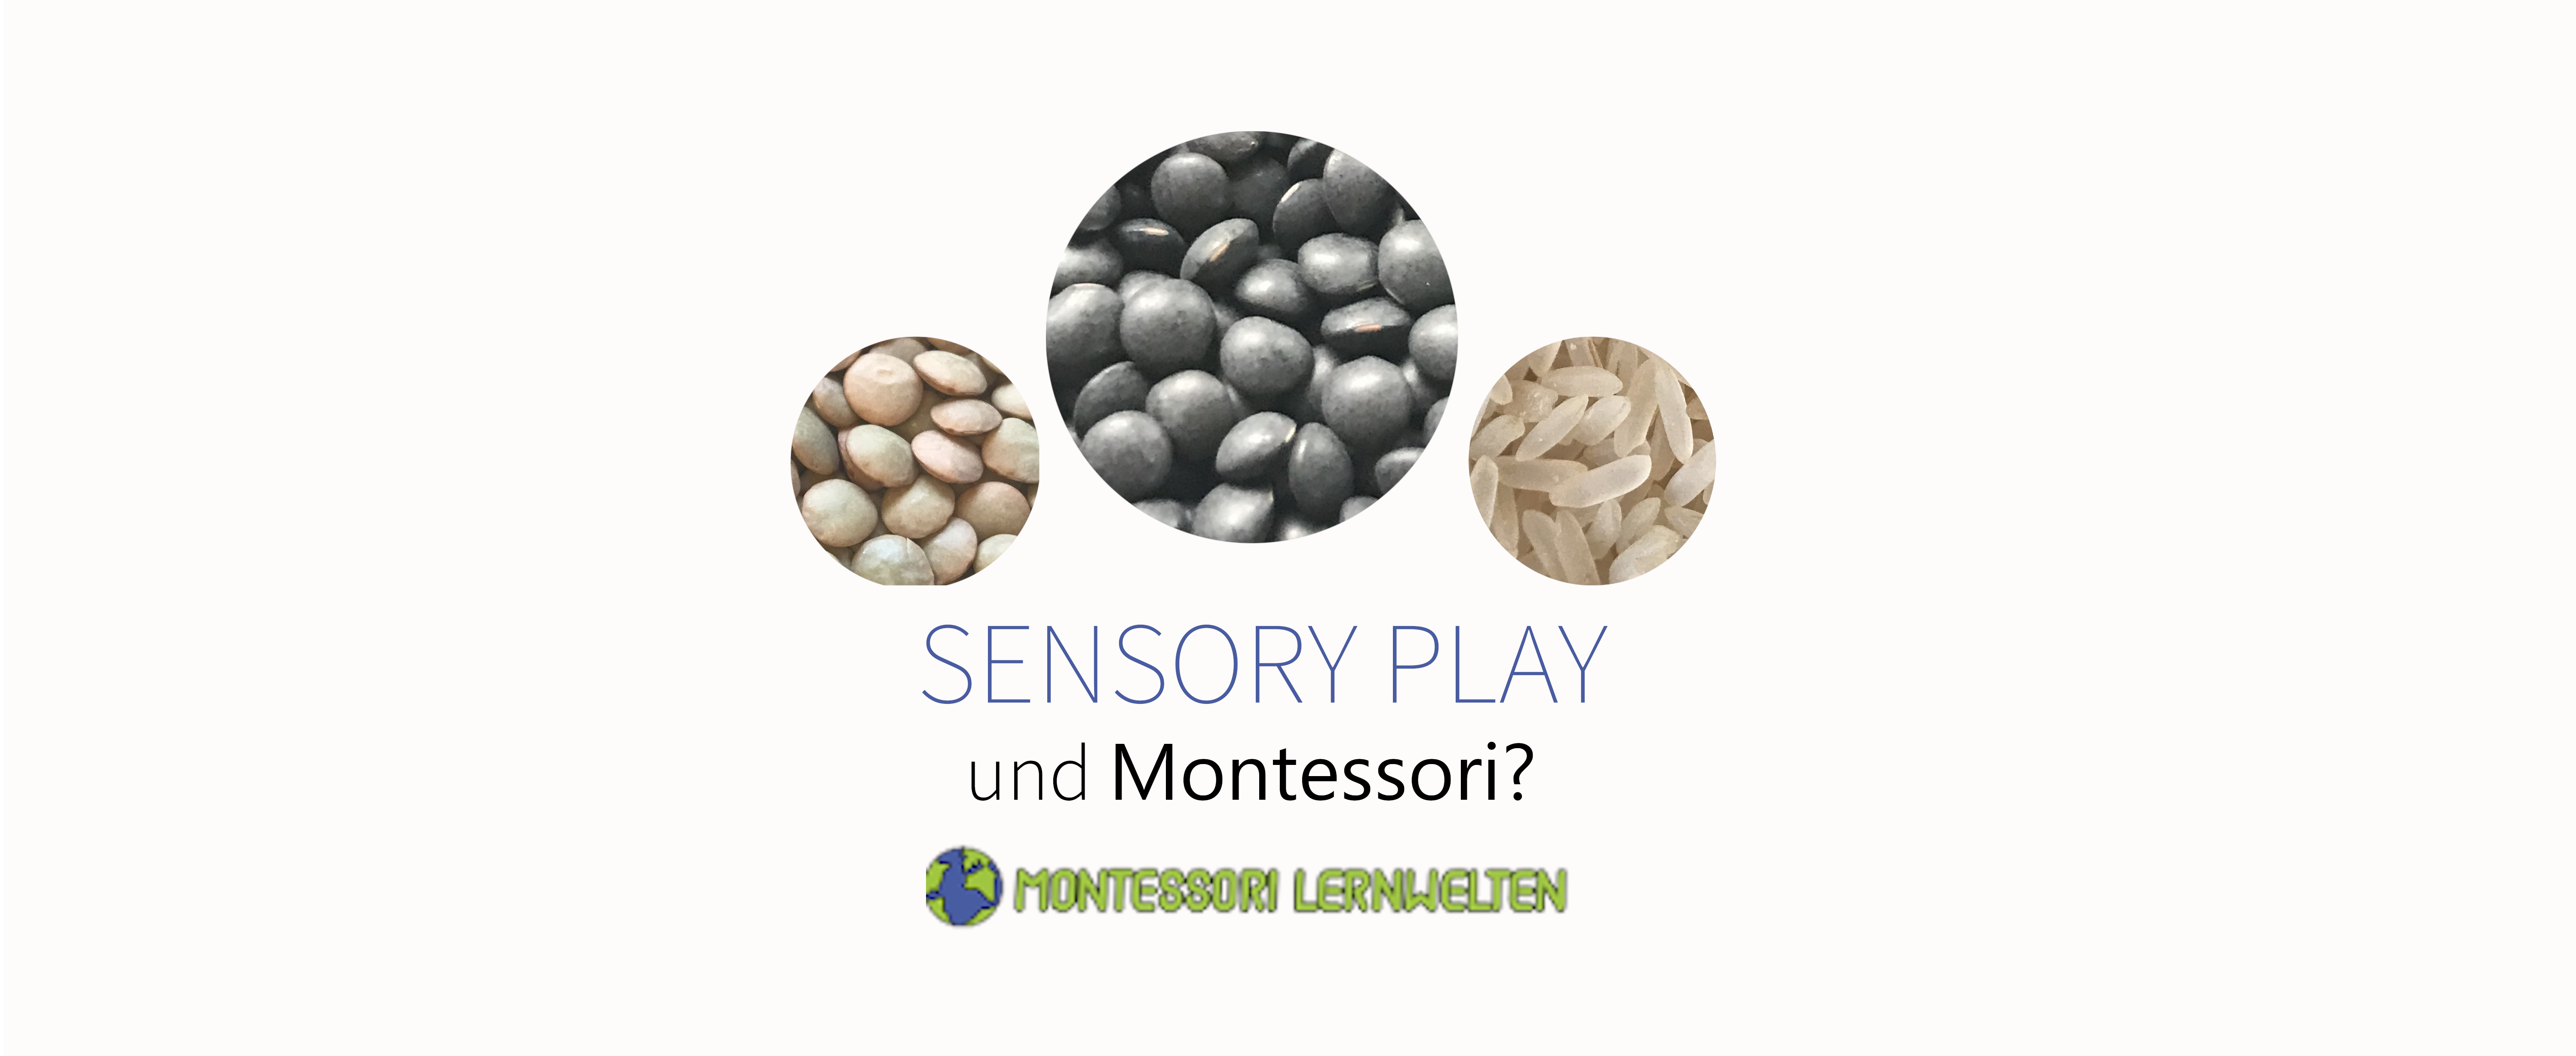 Sensory Play und Montessori?